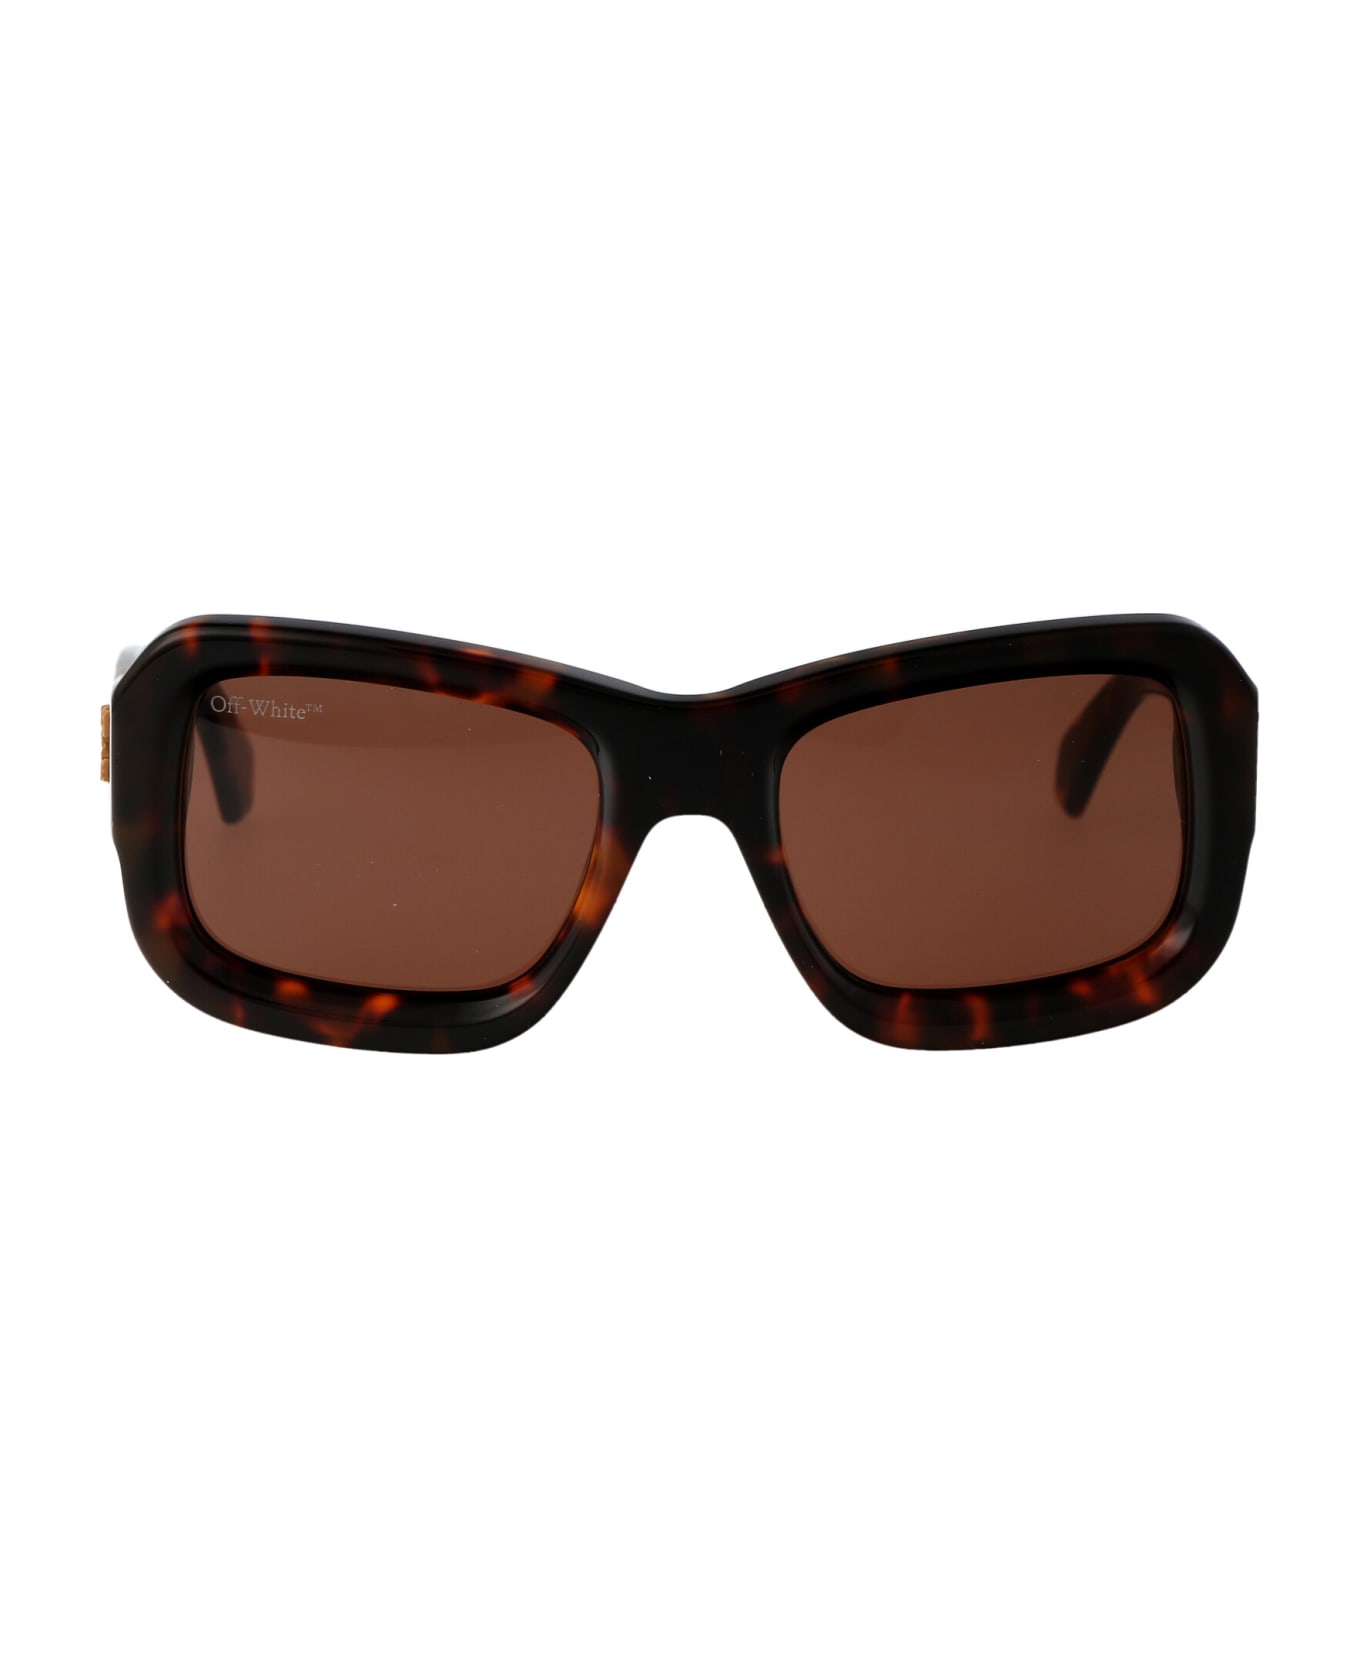 Off-White Verona Sunglasses - 6064 HAVANA サングラス